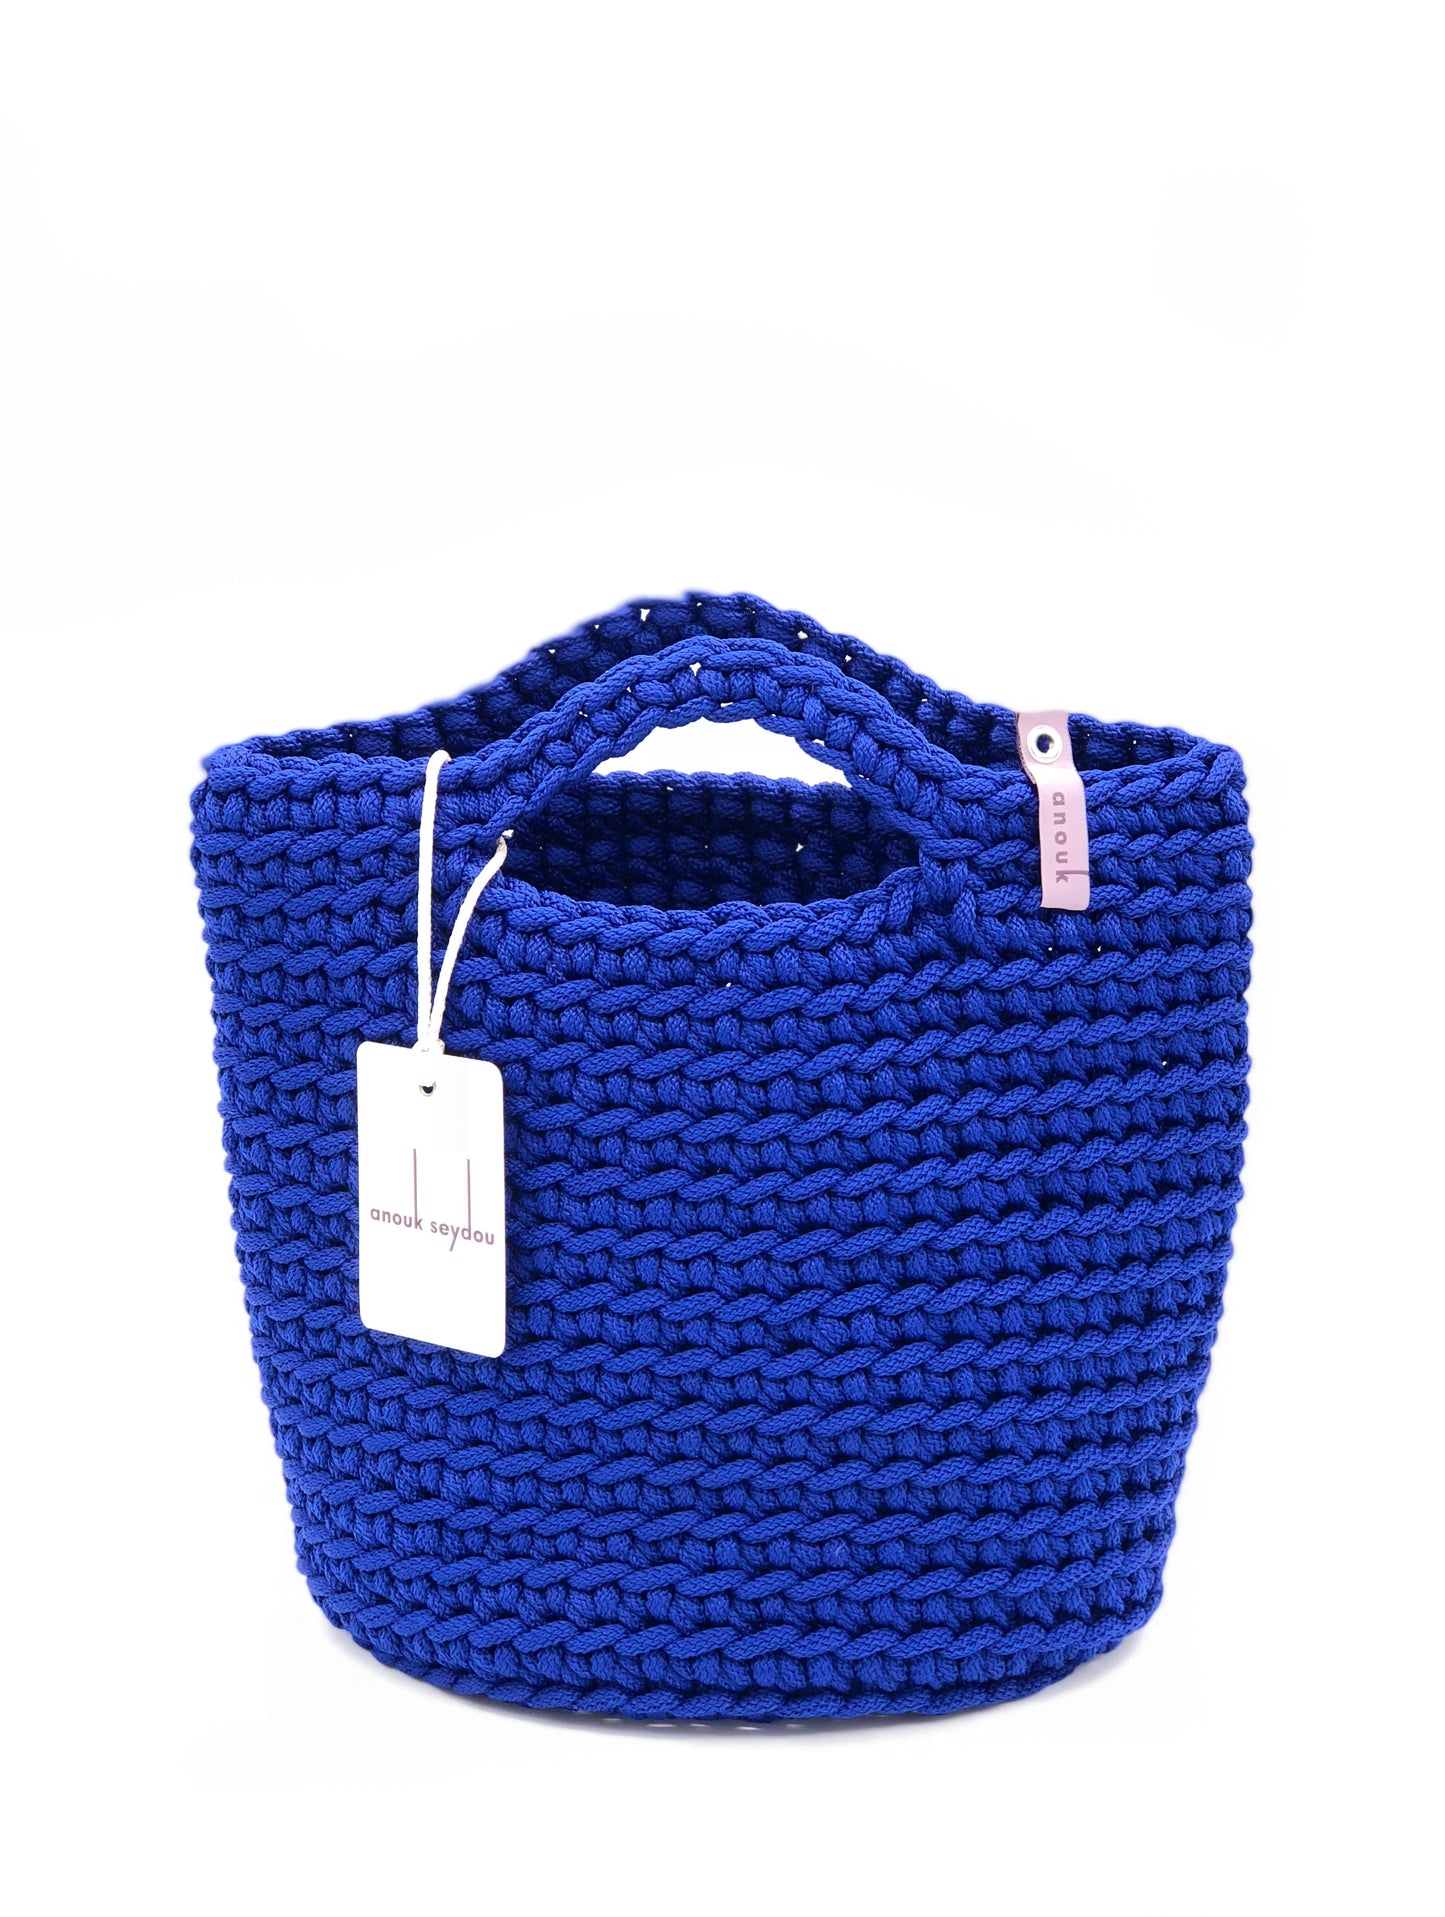 Scandinavian Style Handmade Crochet Tote Bag with Short Handles Midnight Blue